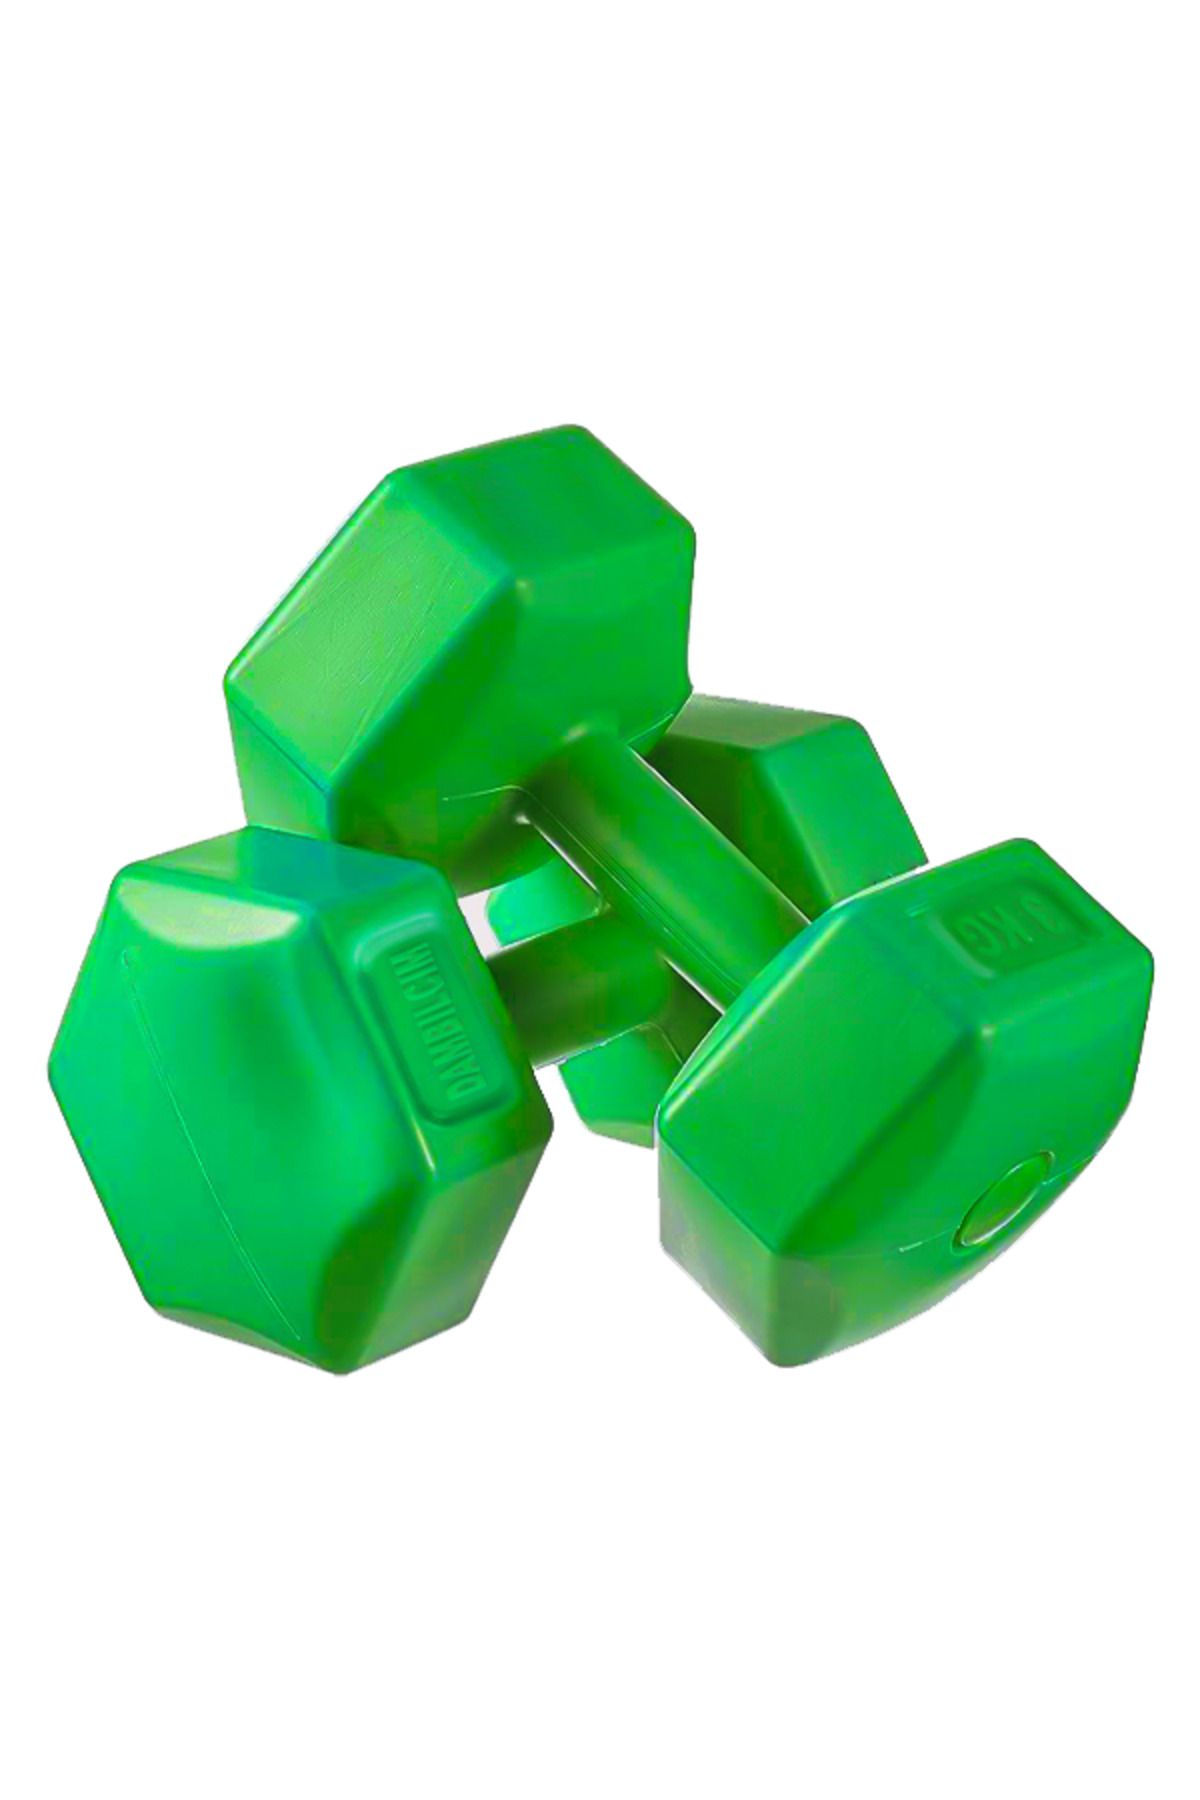 Moccastyle Dambıl Seti Yeşil 3 KG x 2 Adet 6 KG Dambıl Seti 6 KG Dumbell Set 6 Kg Yeşil Vinyl 6 Kg